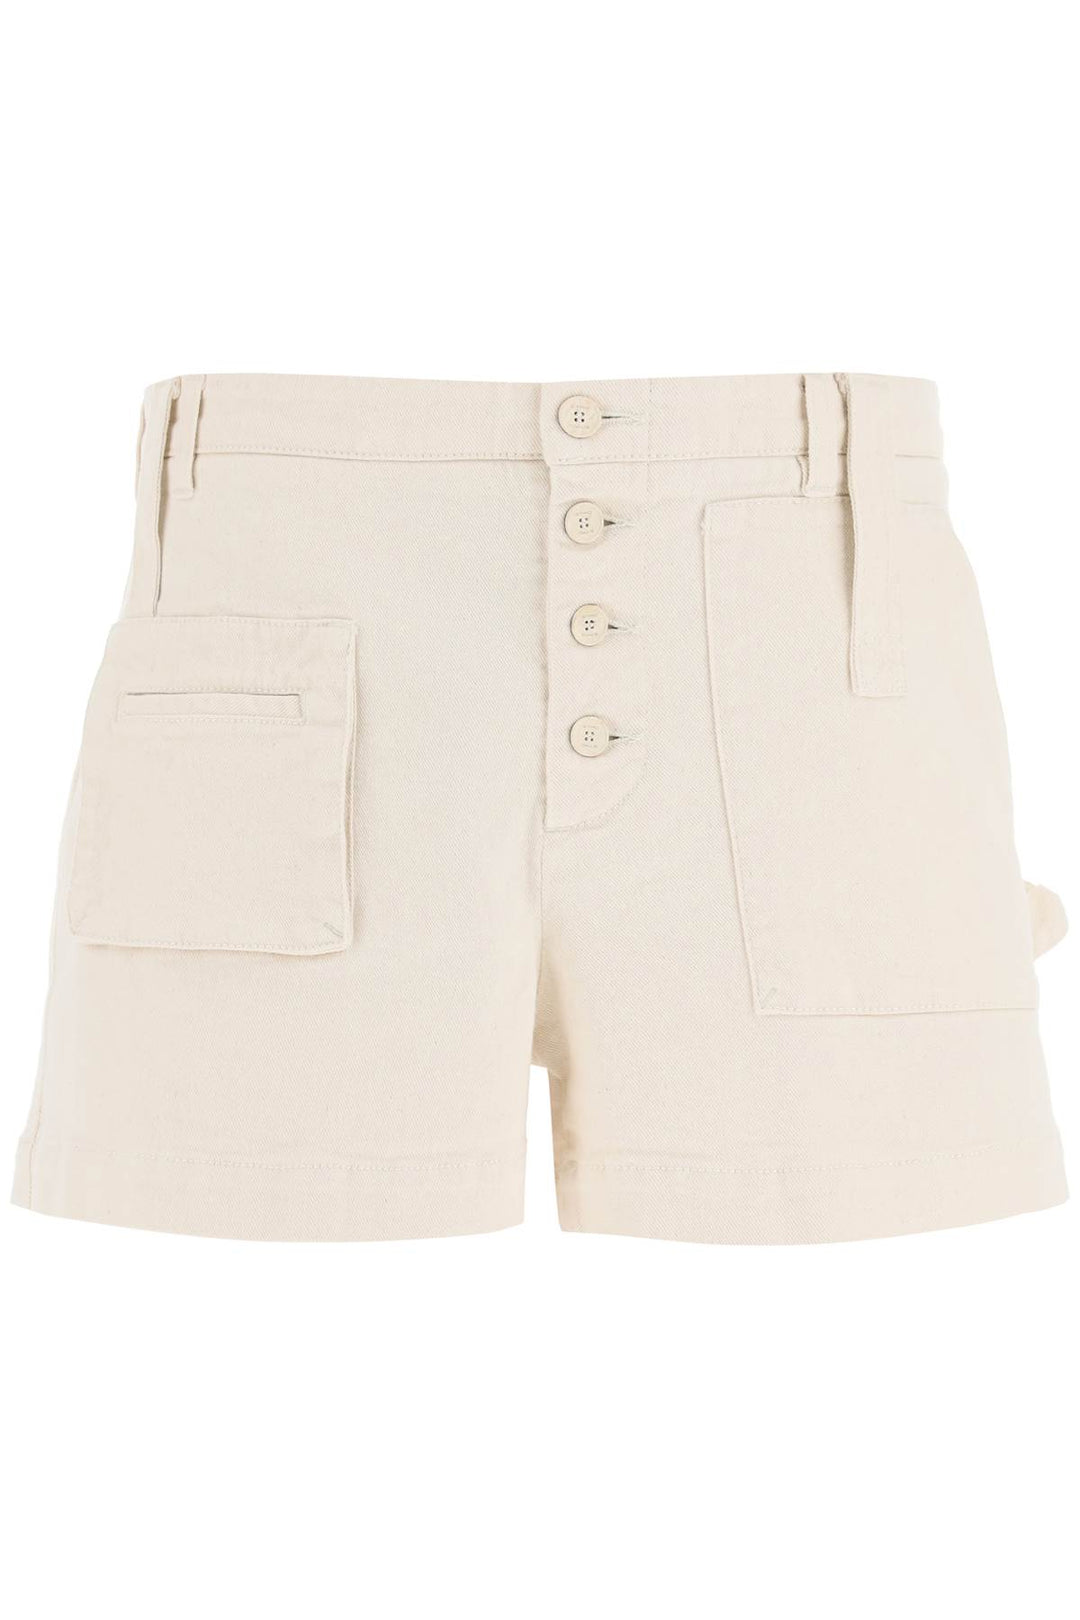 Etro Multi Pocket High Waist Shorts   Bianco